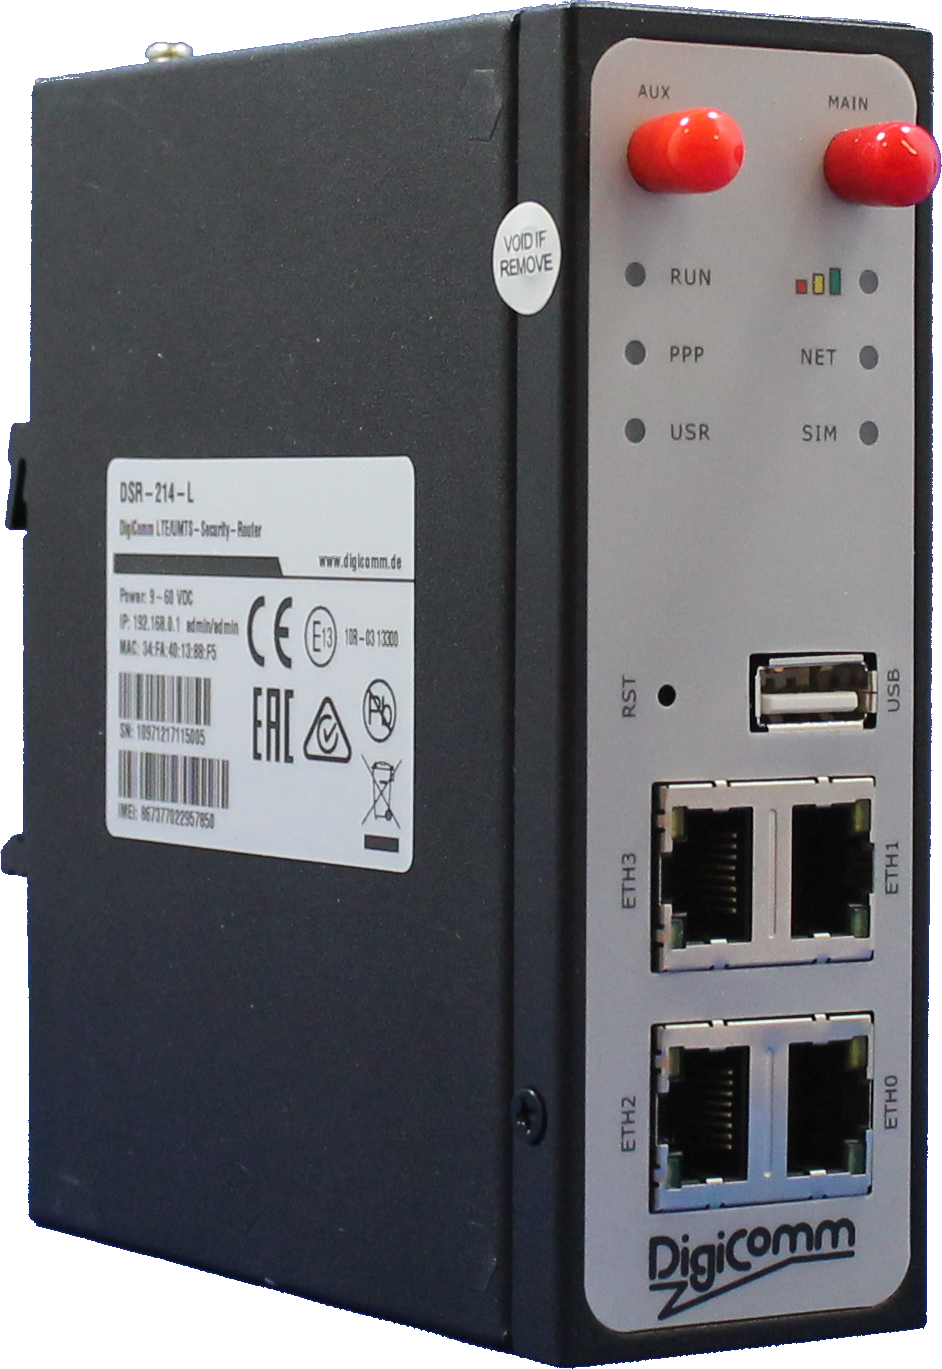 DSR-214 L compact LTE | UMTS router